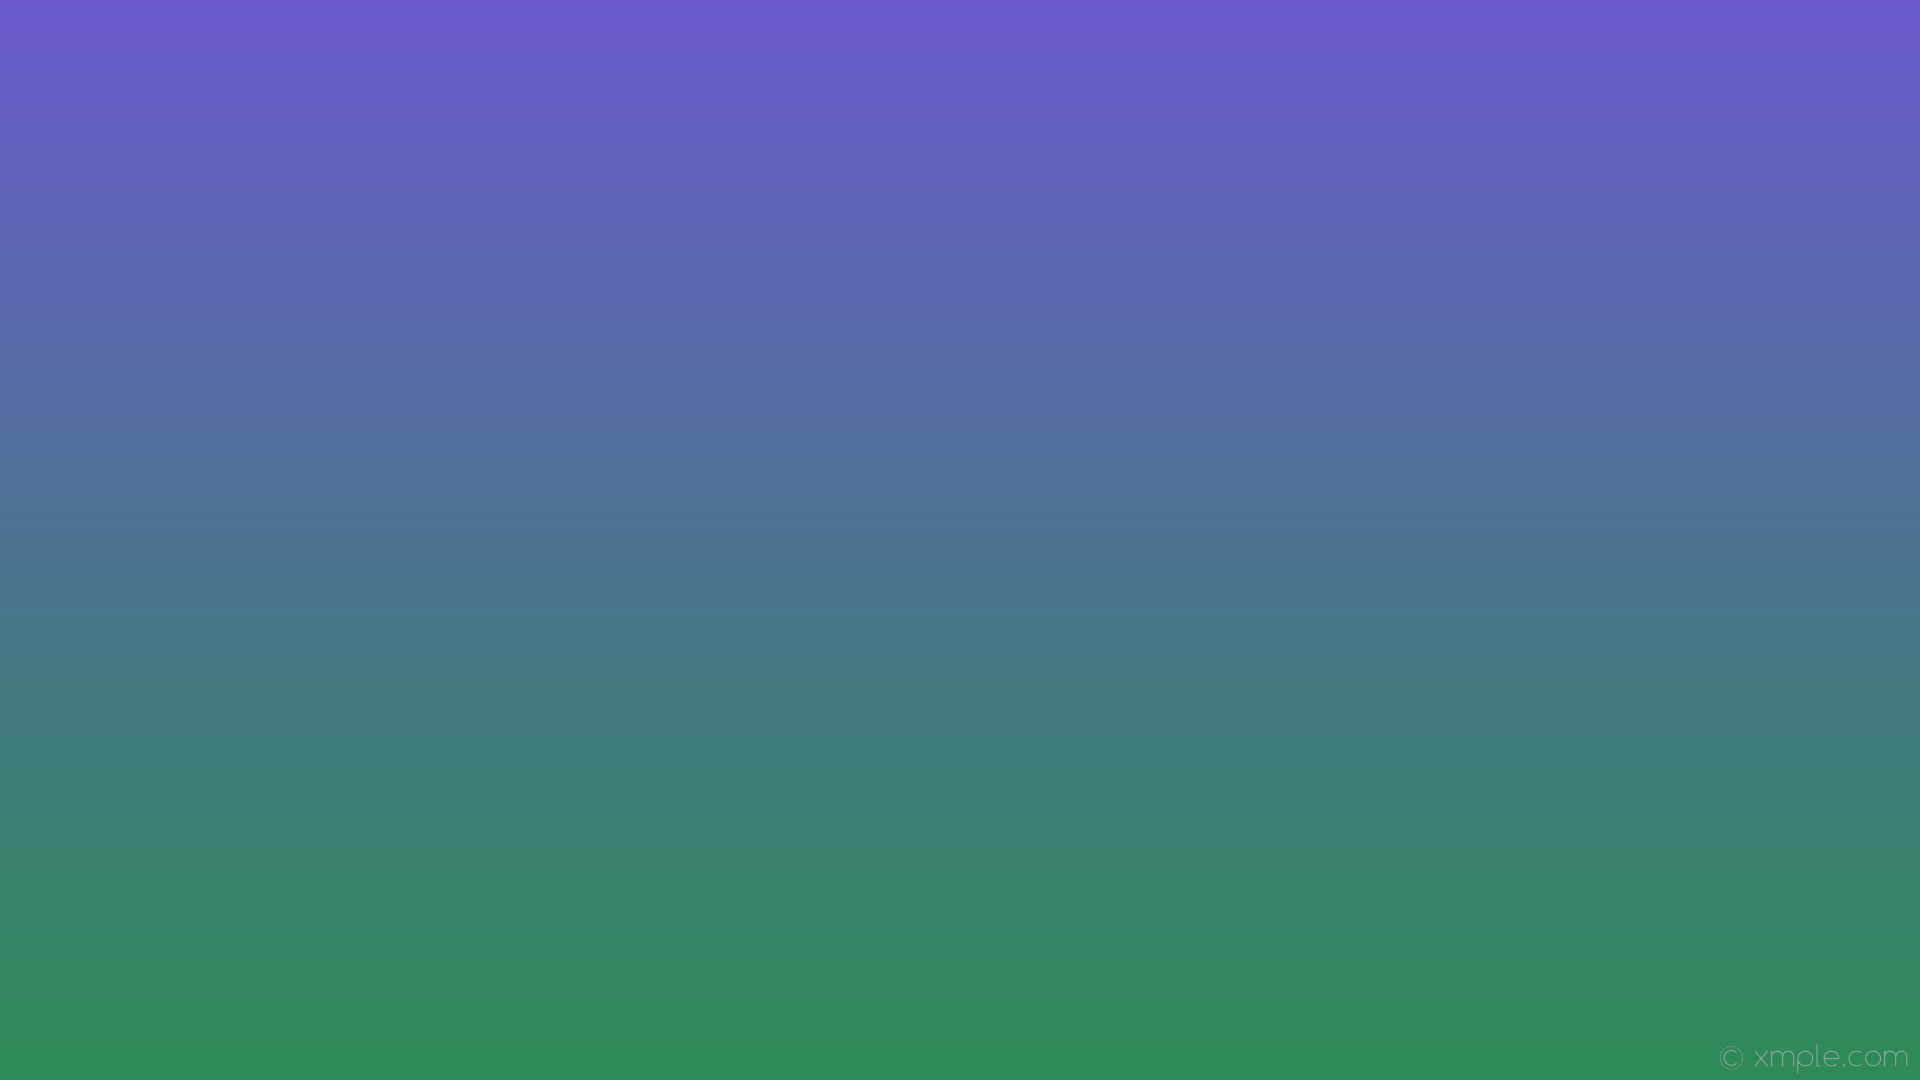 1920x1080 wallpaper gradient green purple linear slate blue sea green #6a5acd #2e8b57  90Â°